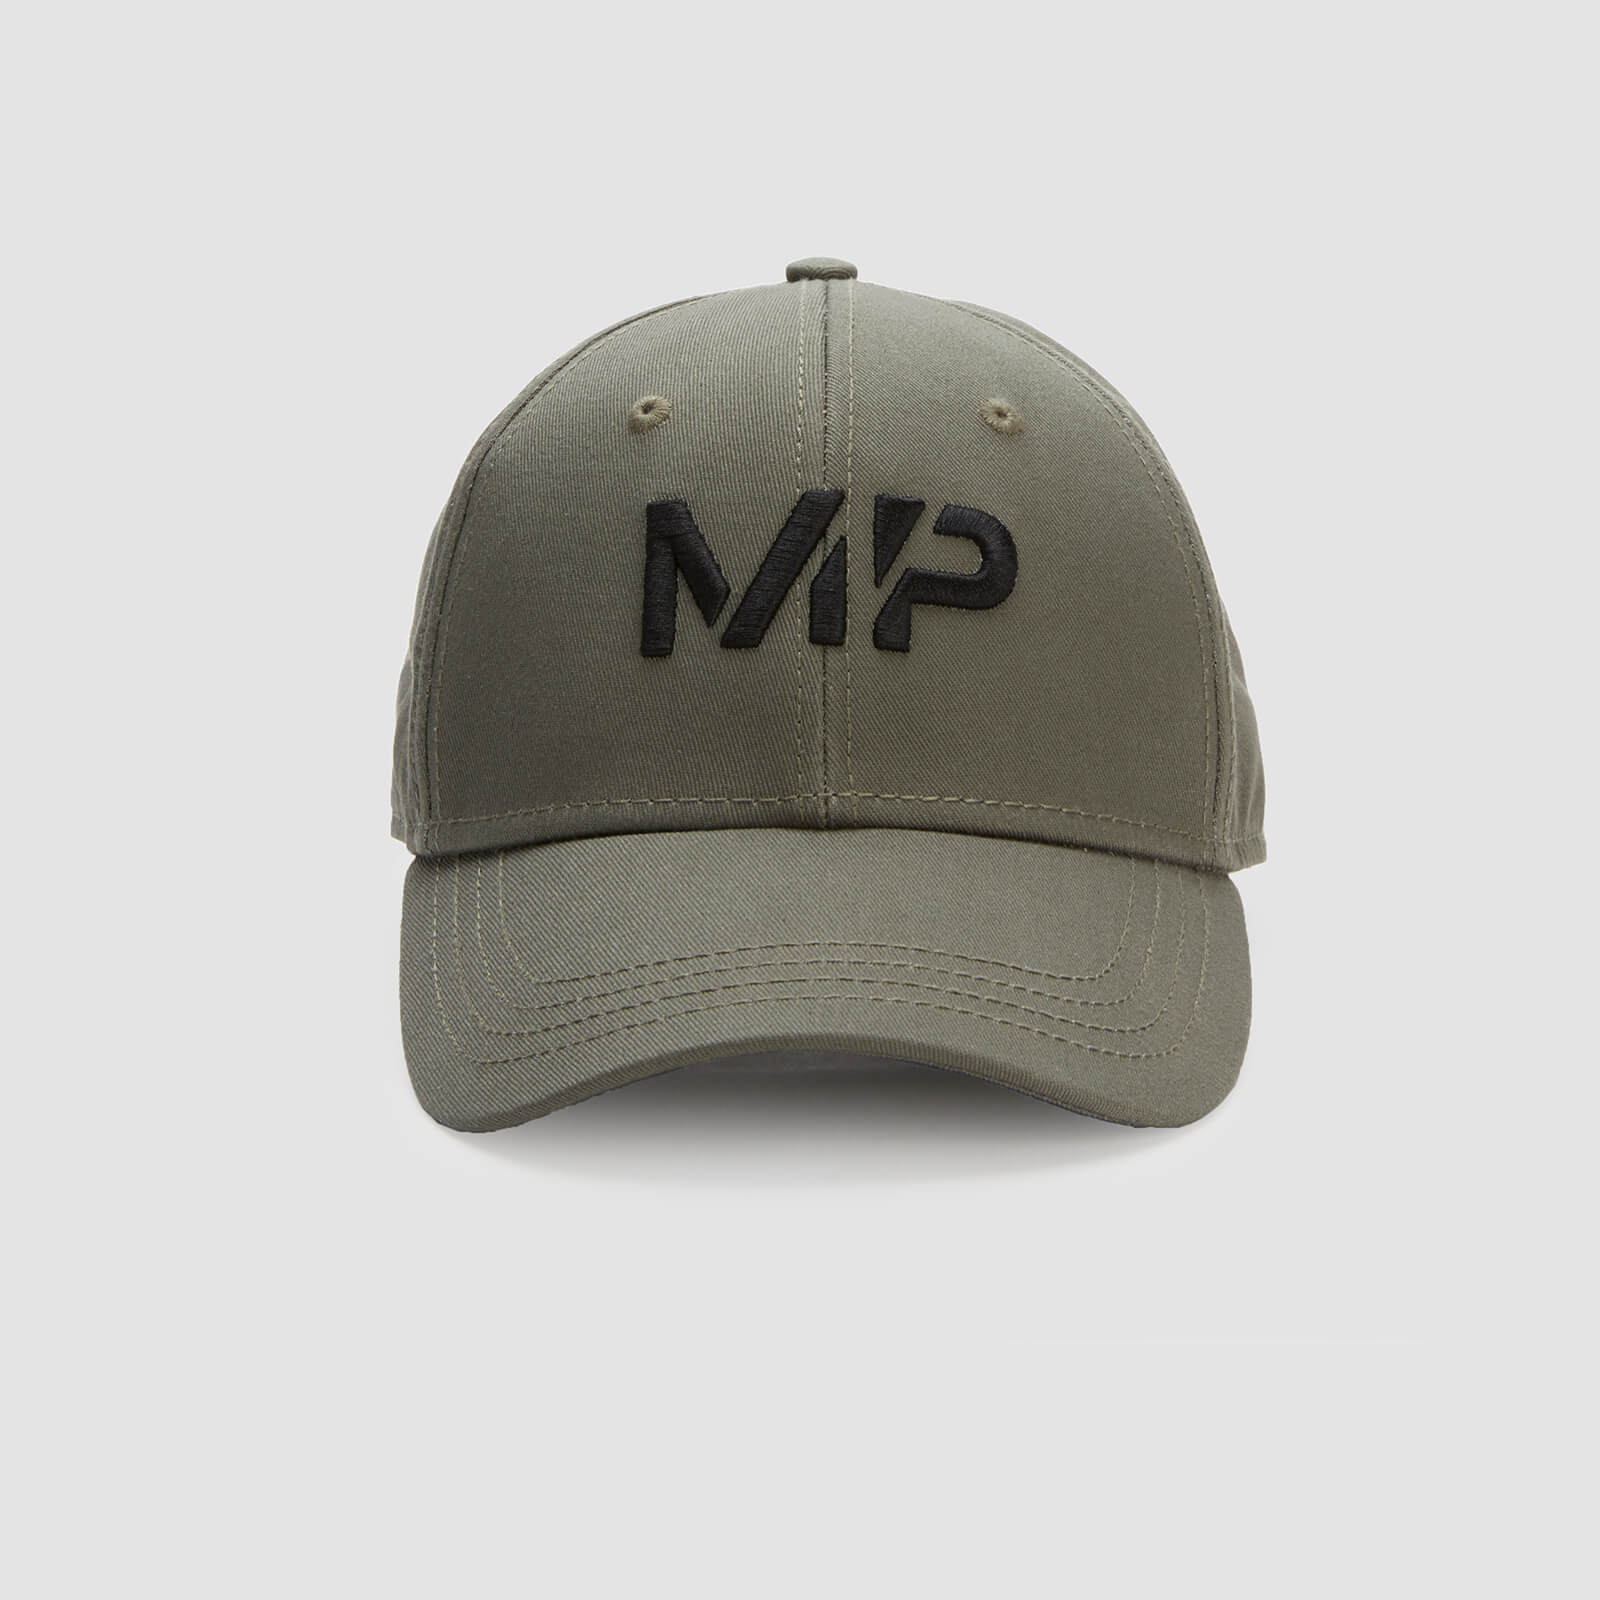 MP Baseball Cap - Brindle